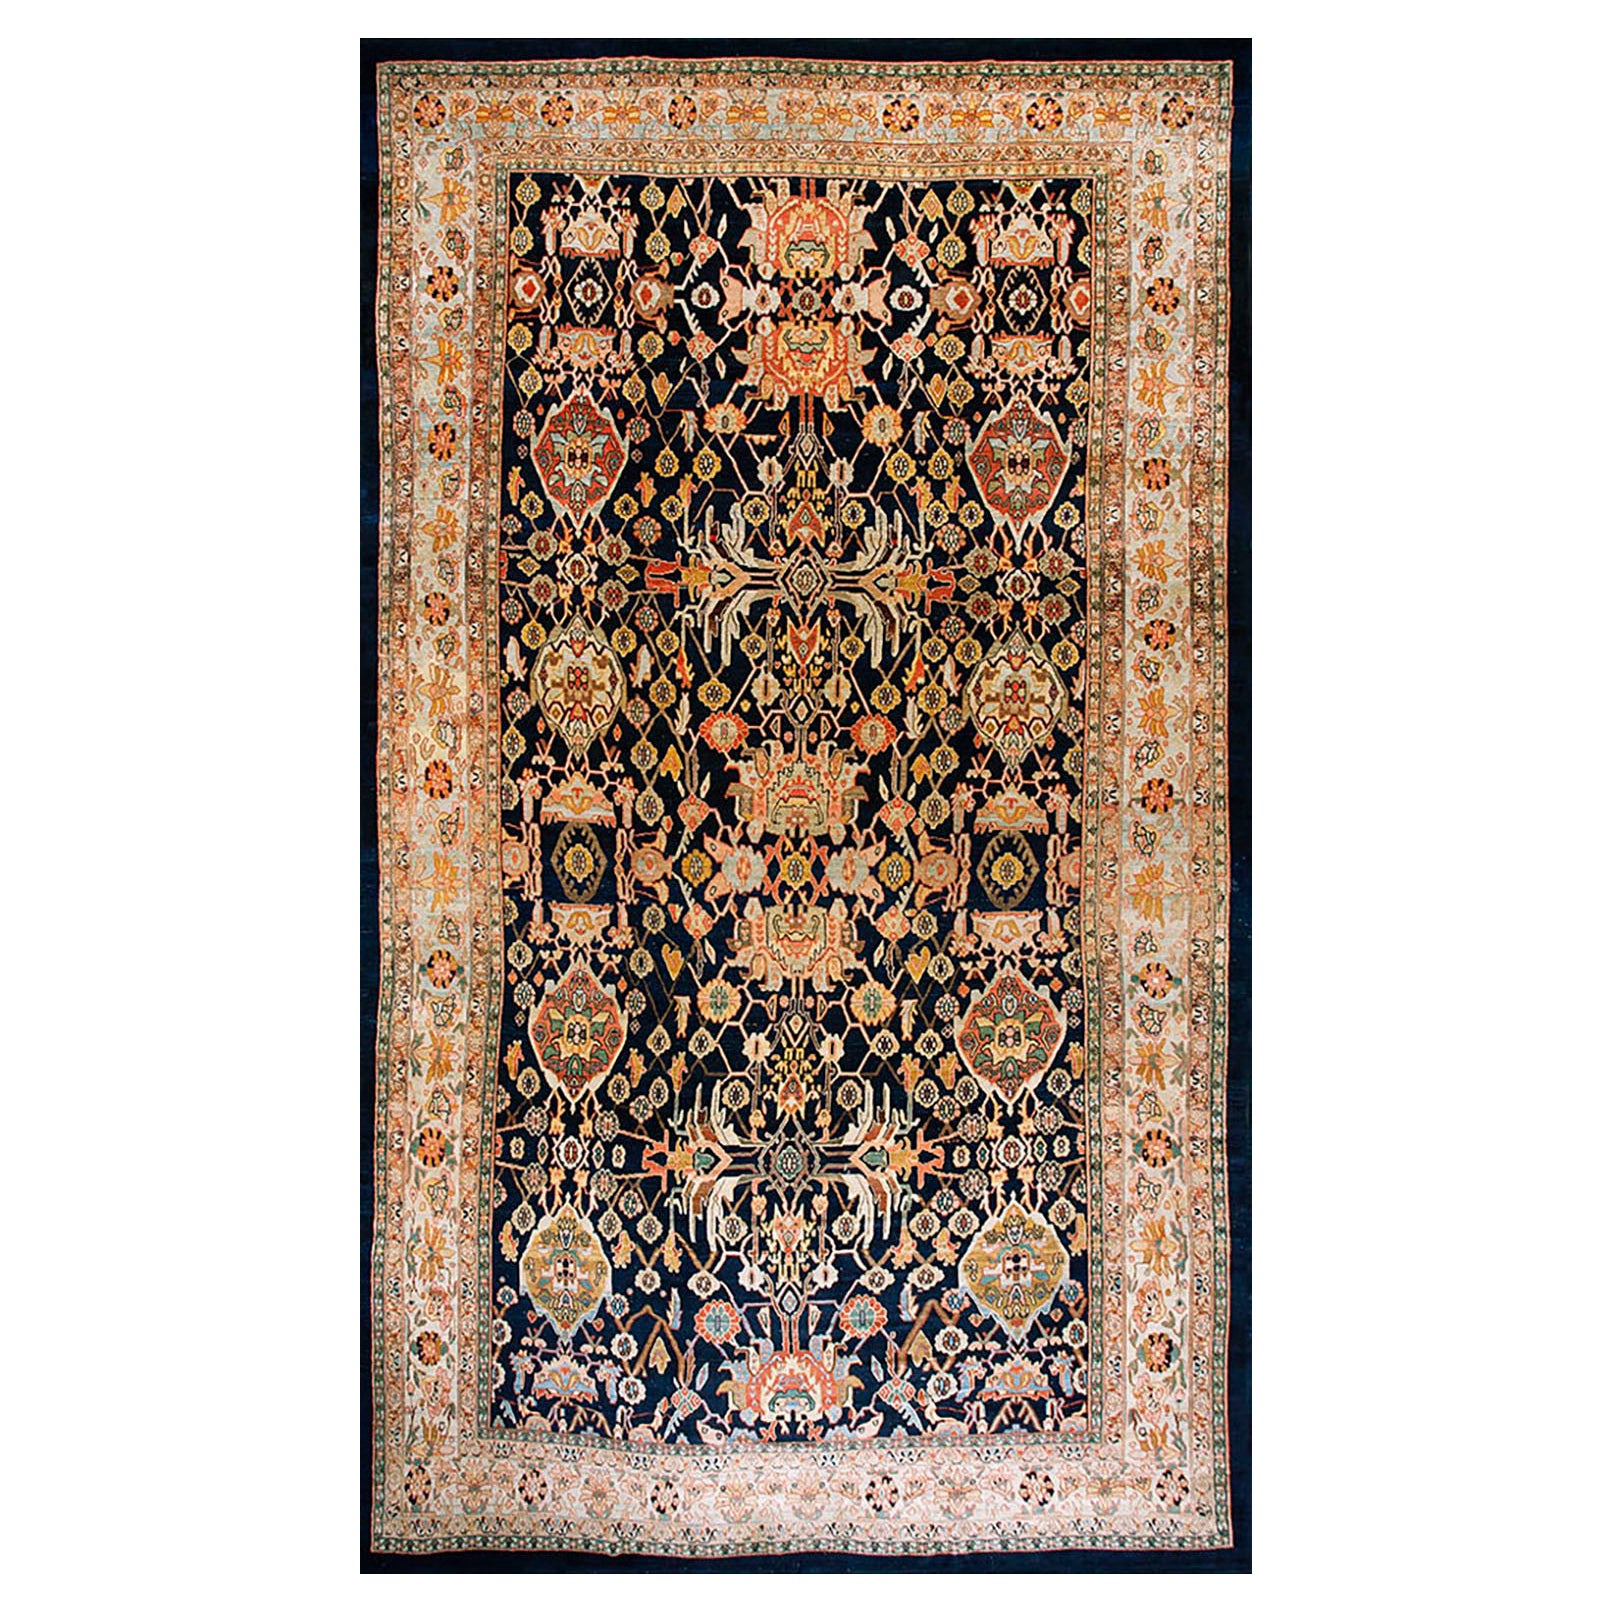 19th Century Persian Bibikabad Carpet ( 11'4" x 19'8" - 345 x 599 ) For Sale